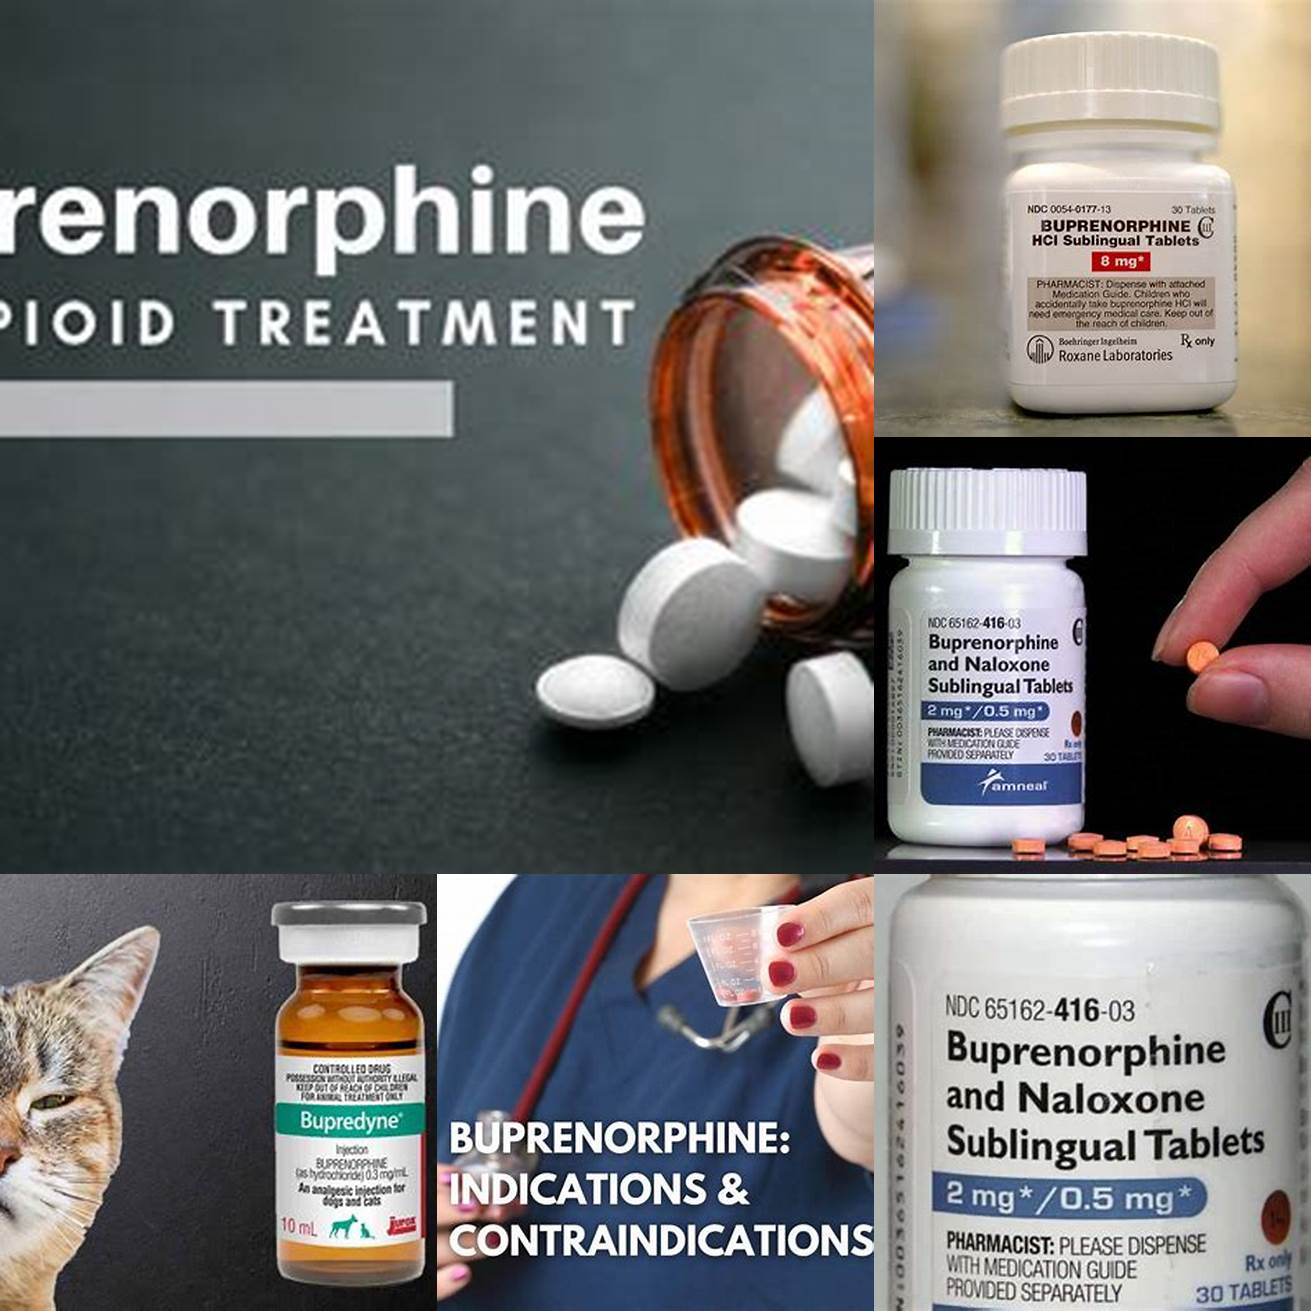 Buprenorphine tablets and liquid